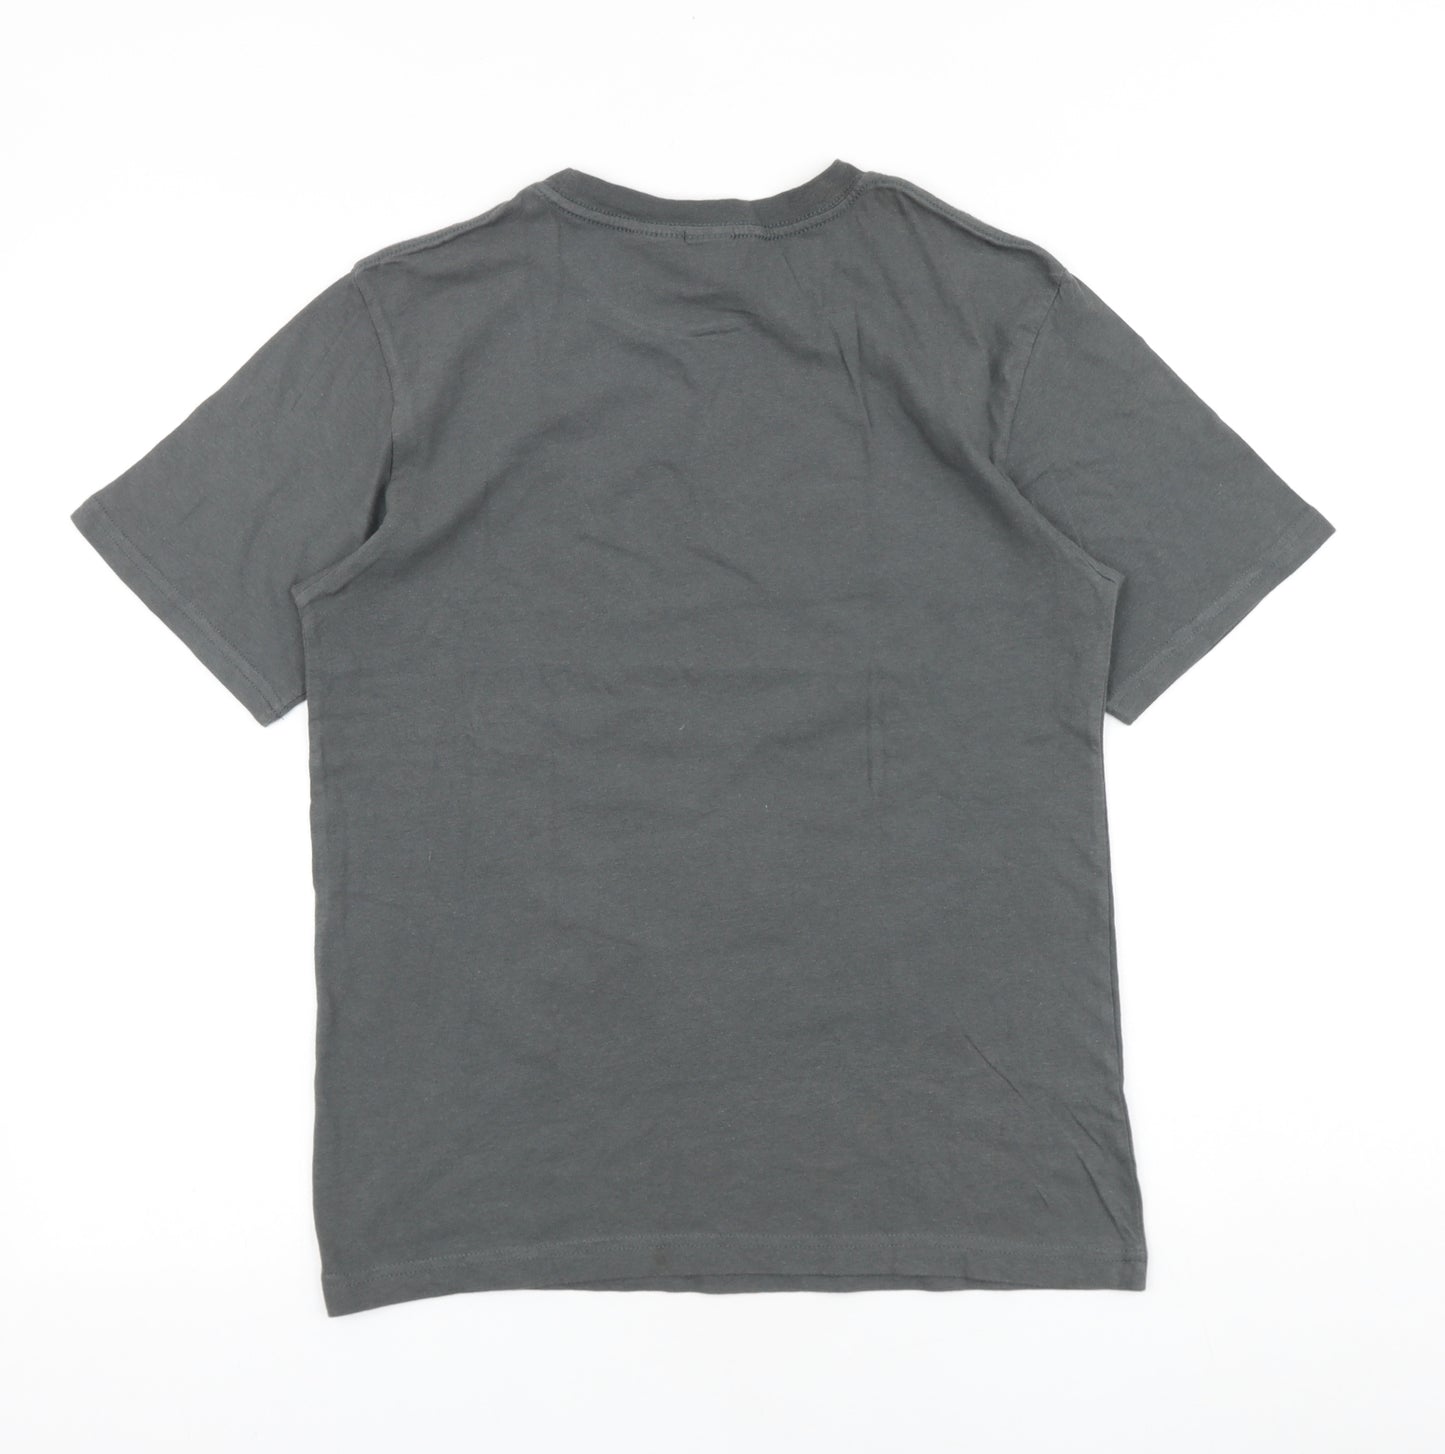 LEGO Boys Grey 100% Cotton Basic T-Shirt Size XL Round Neck Pullover - Batman